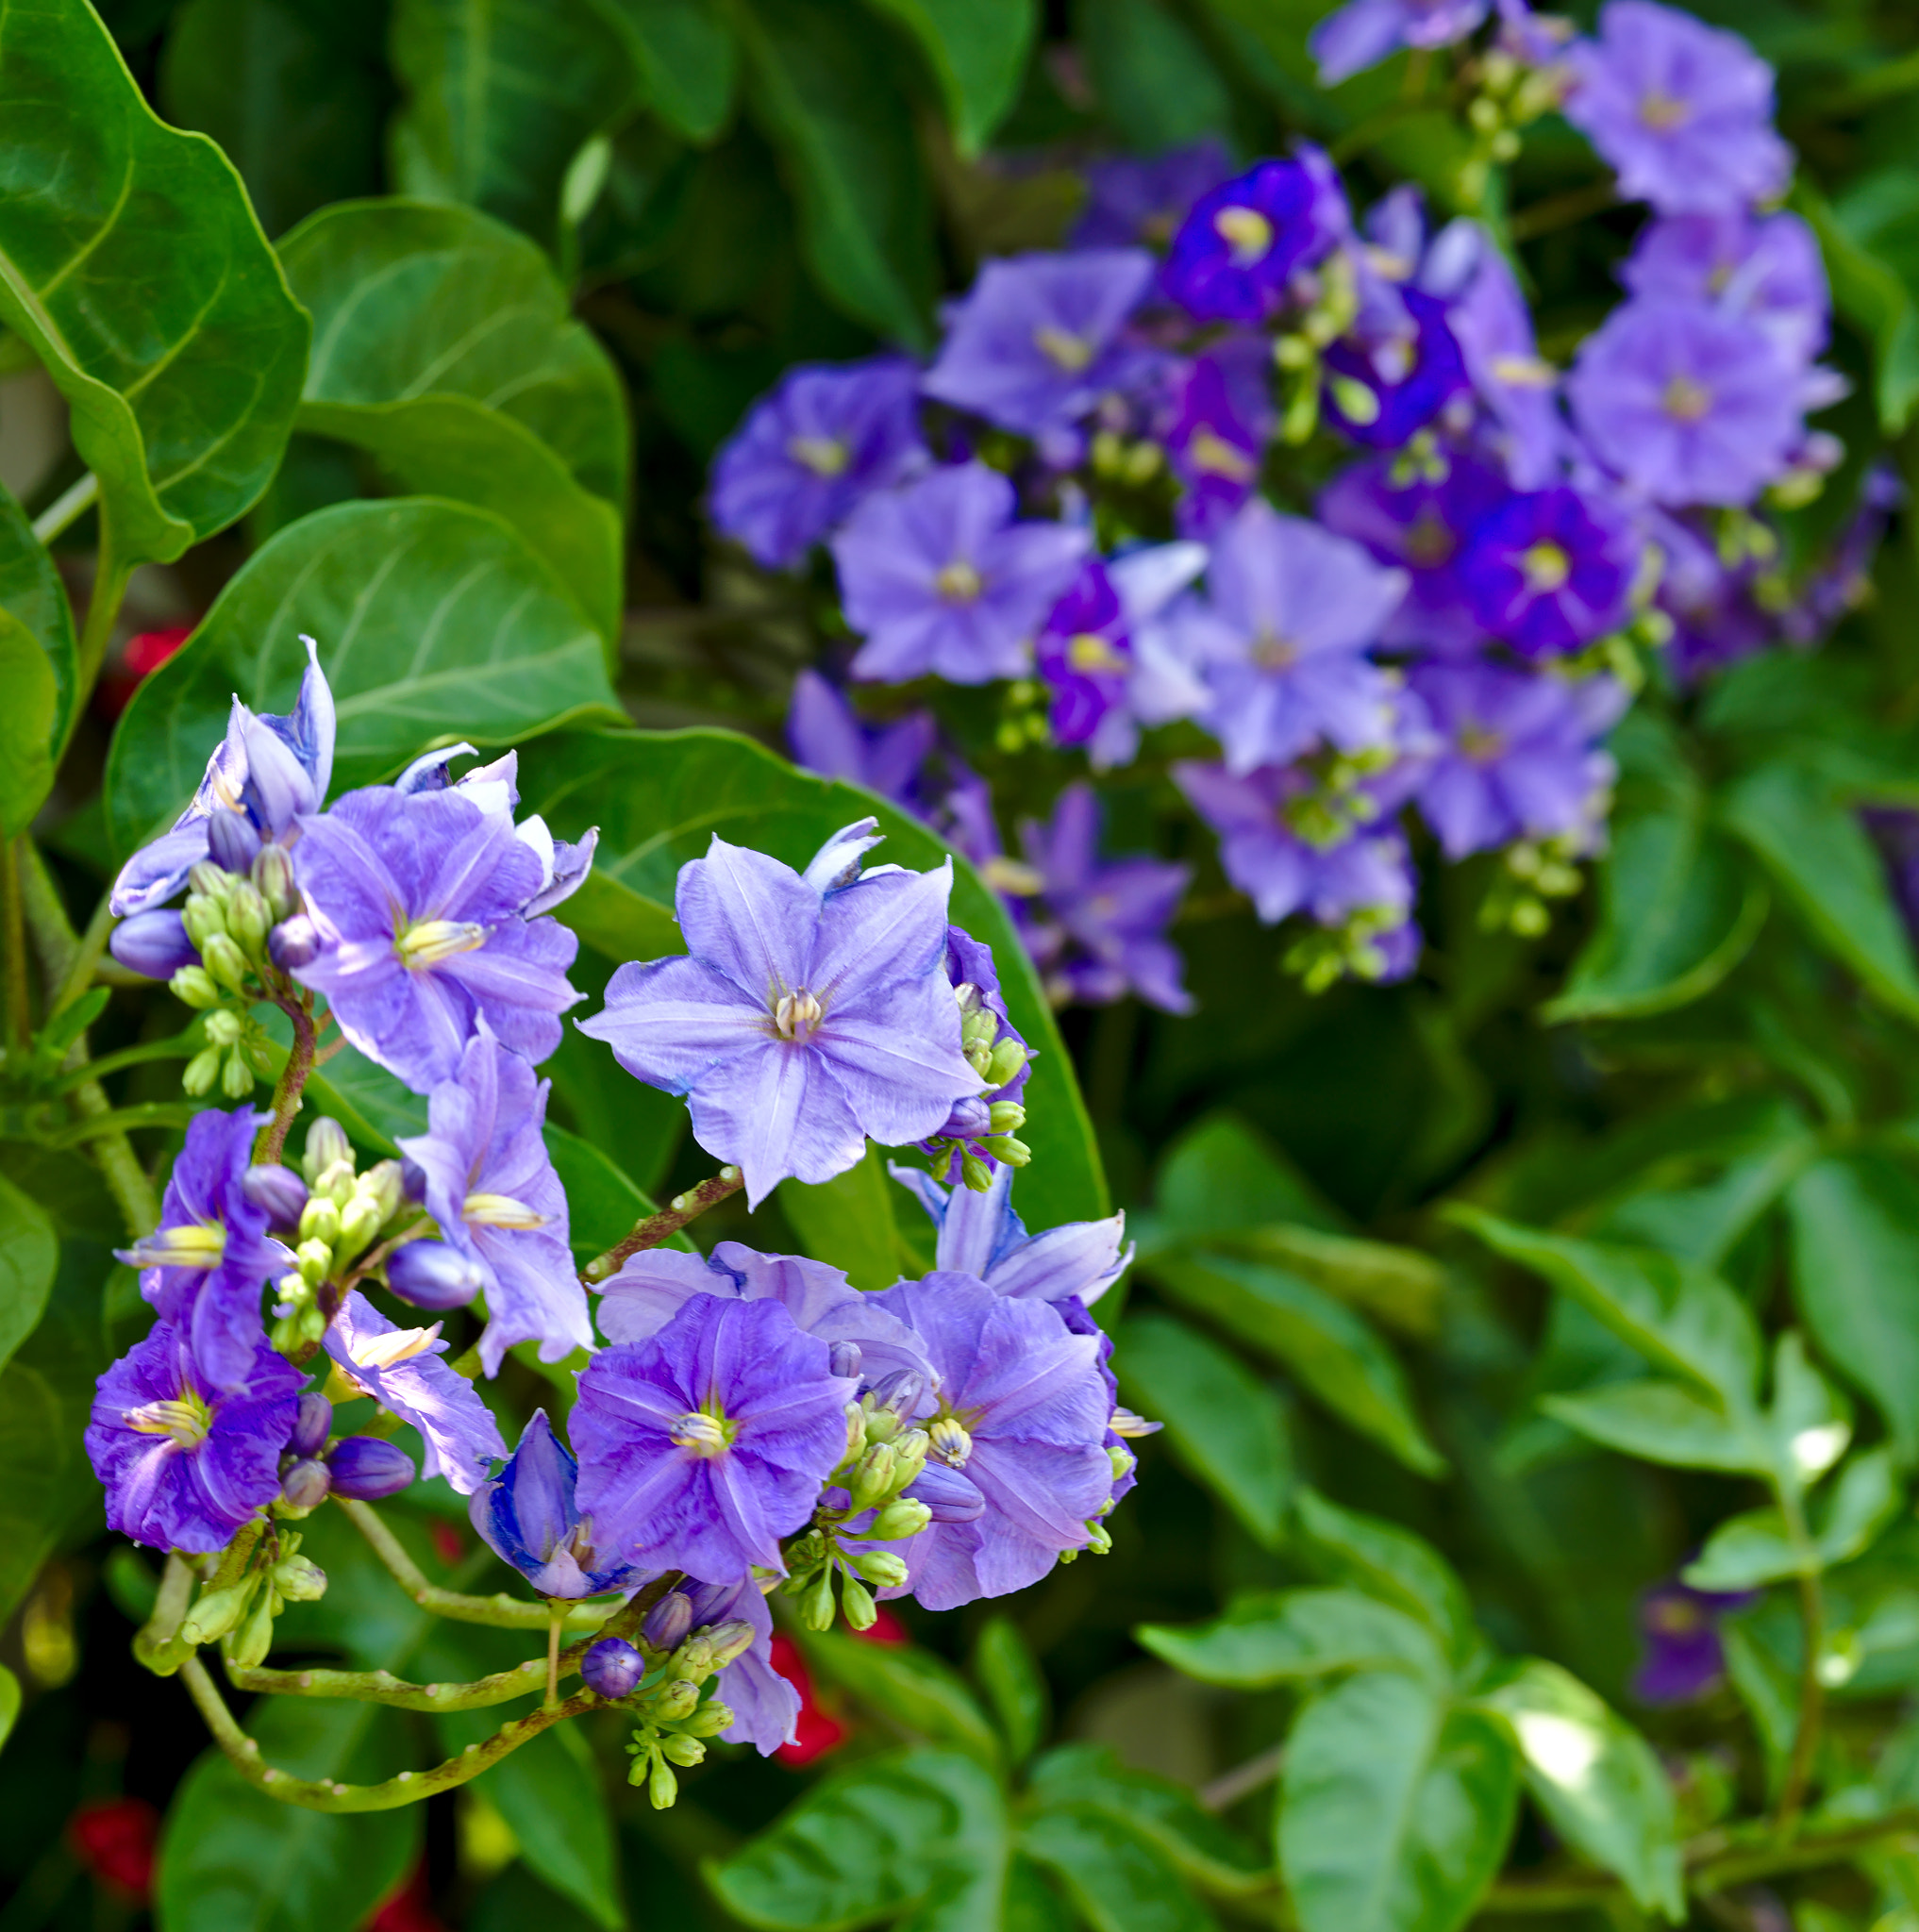 ZEISS Otus 85mm F1.4 sample photo. Purple flowers photography